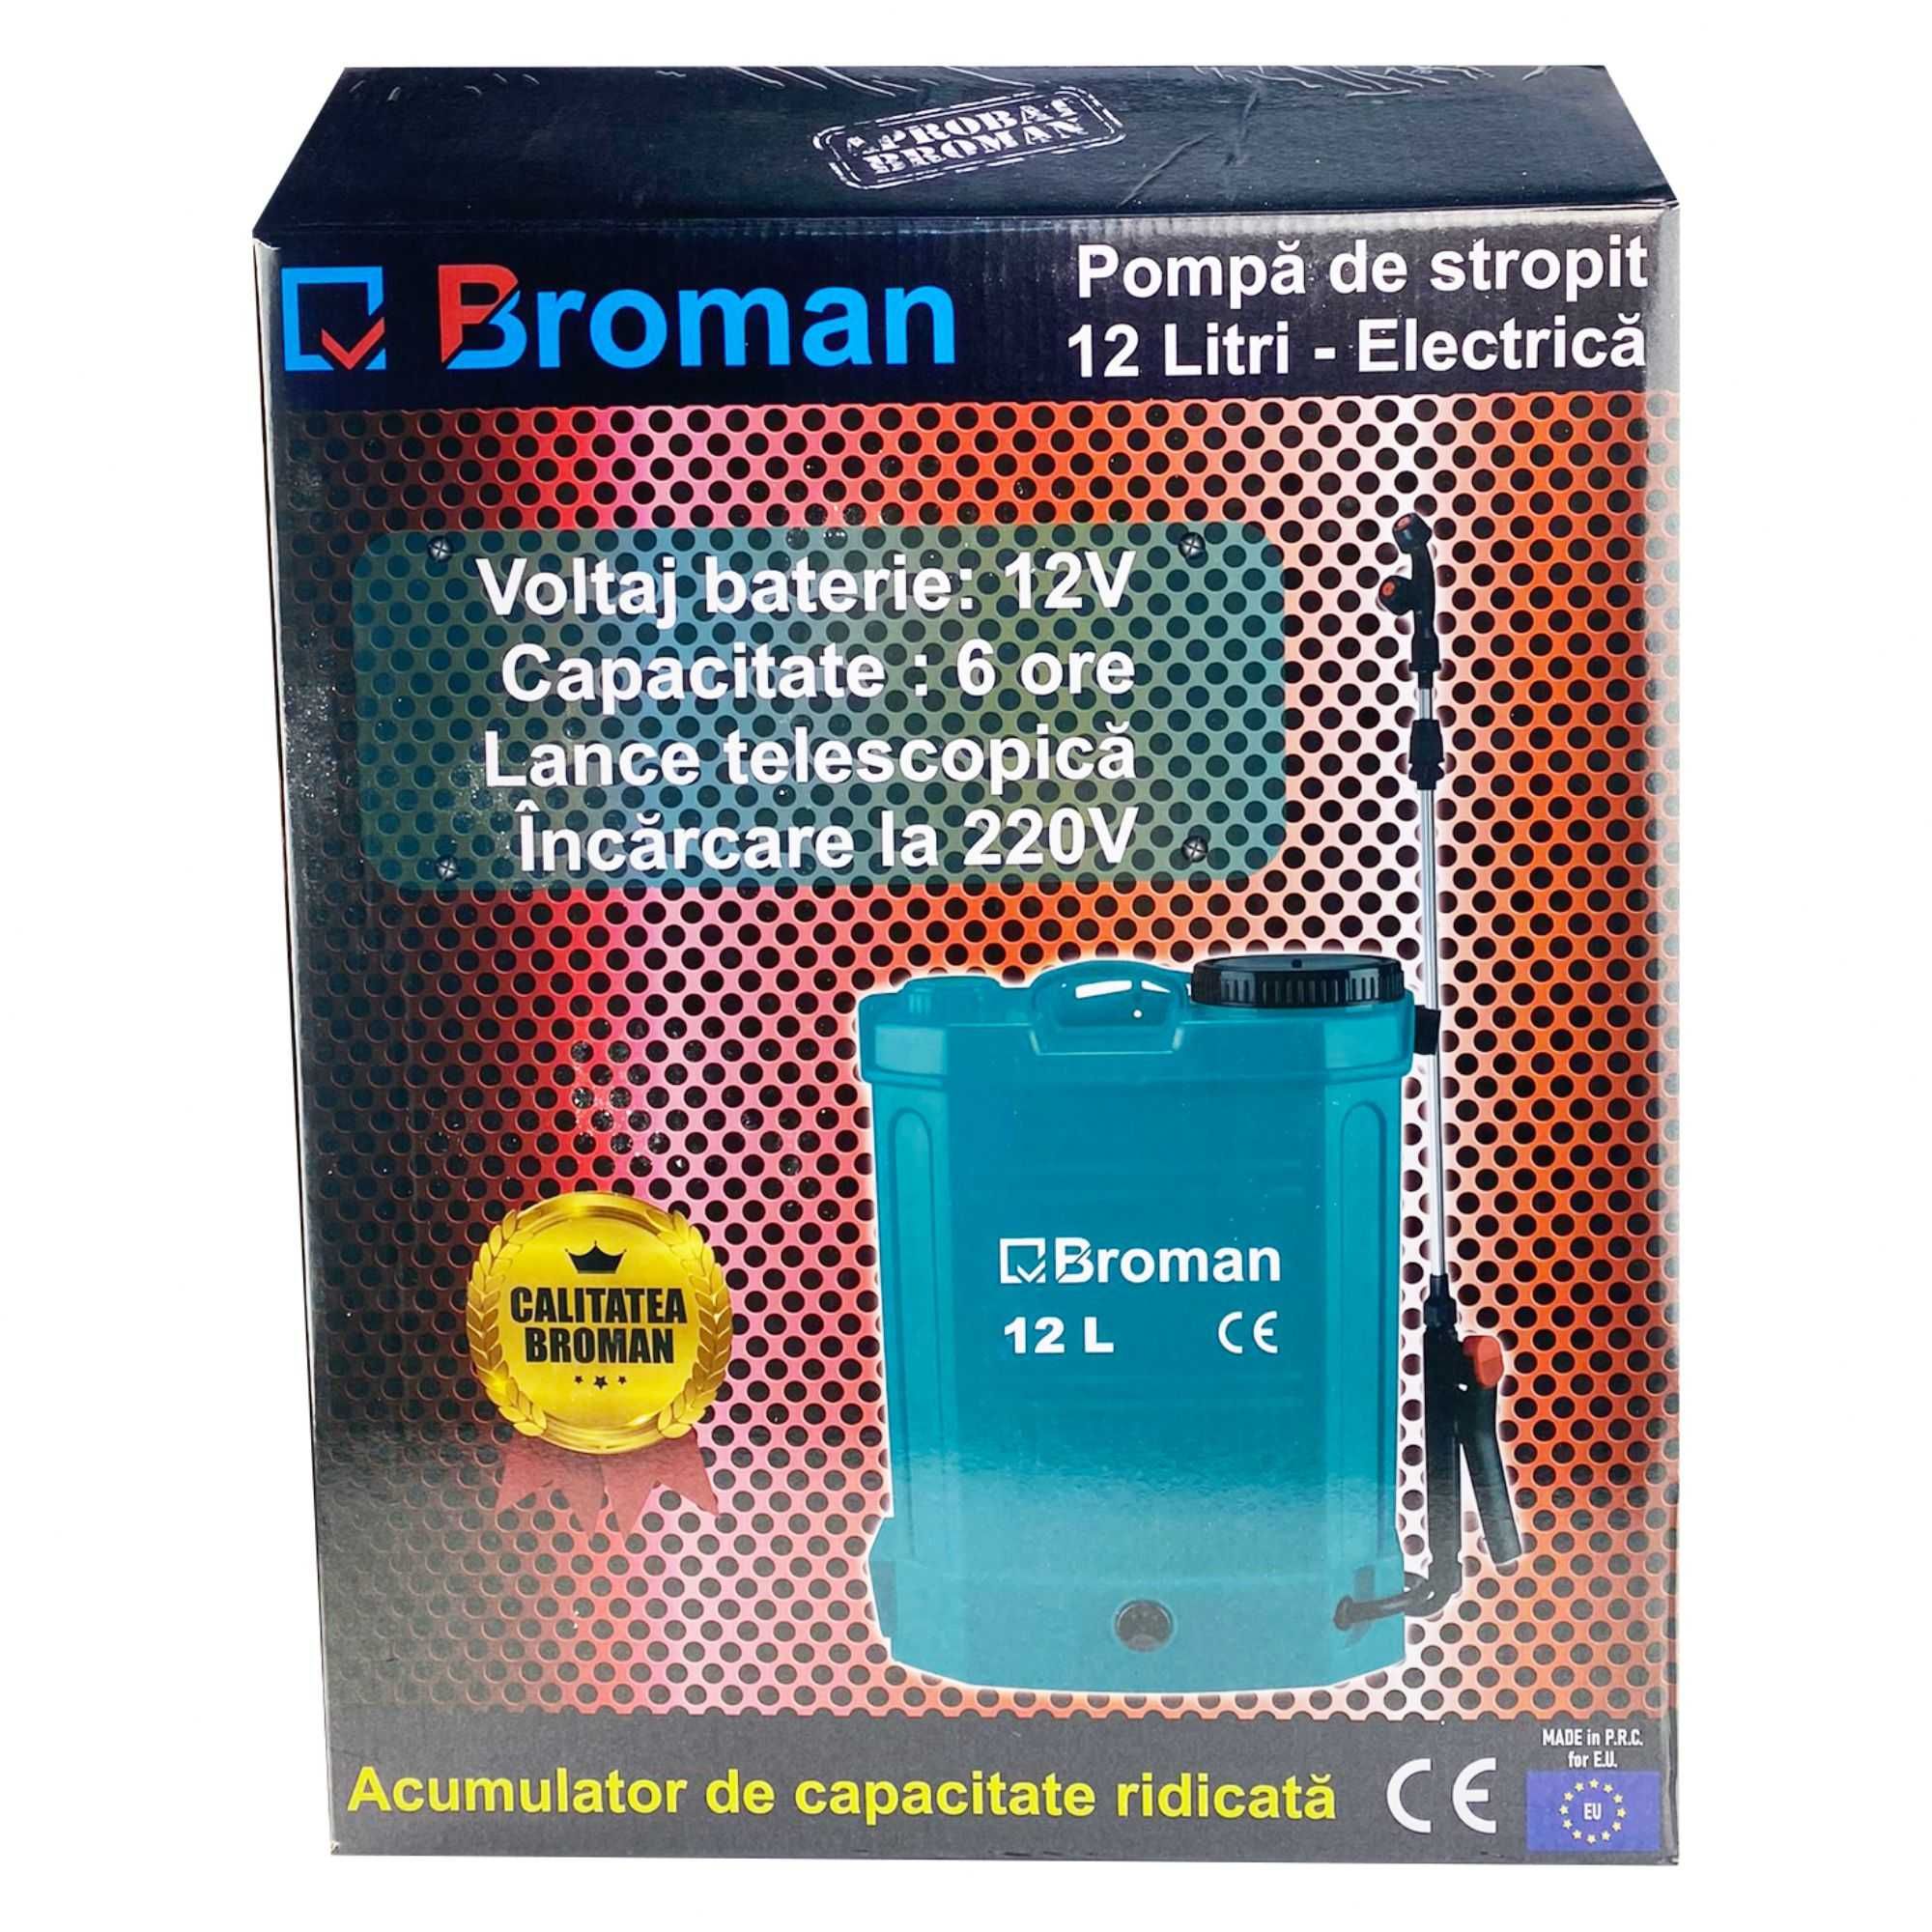 Pompa de stropit electrică, Broman, 12 L